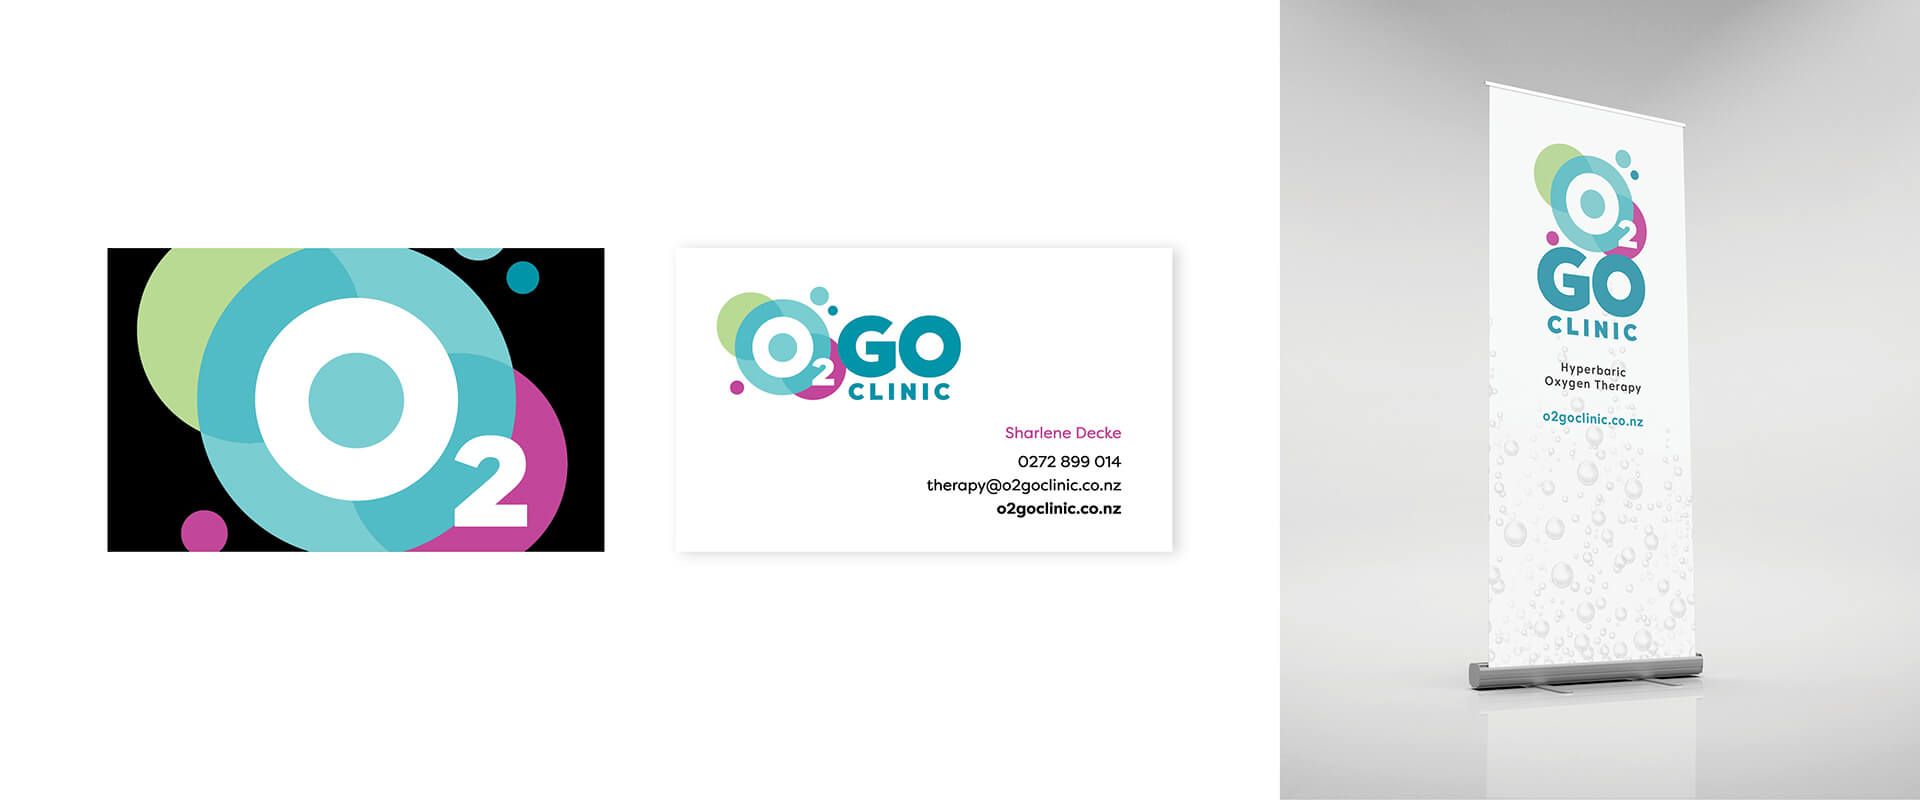 O2GO Clinic branding by Vanilla Hayes Ltd in Blenheim, New Zealand